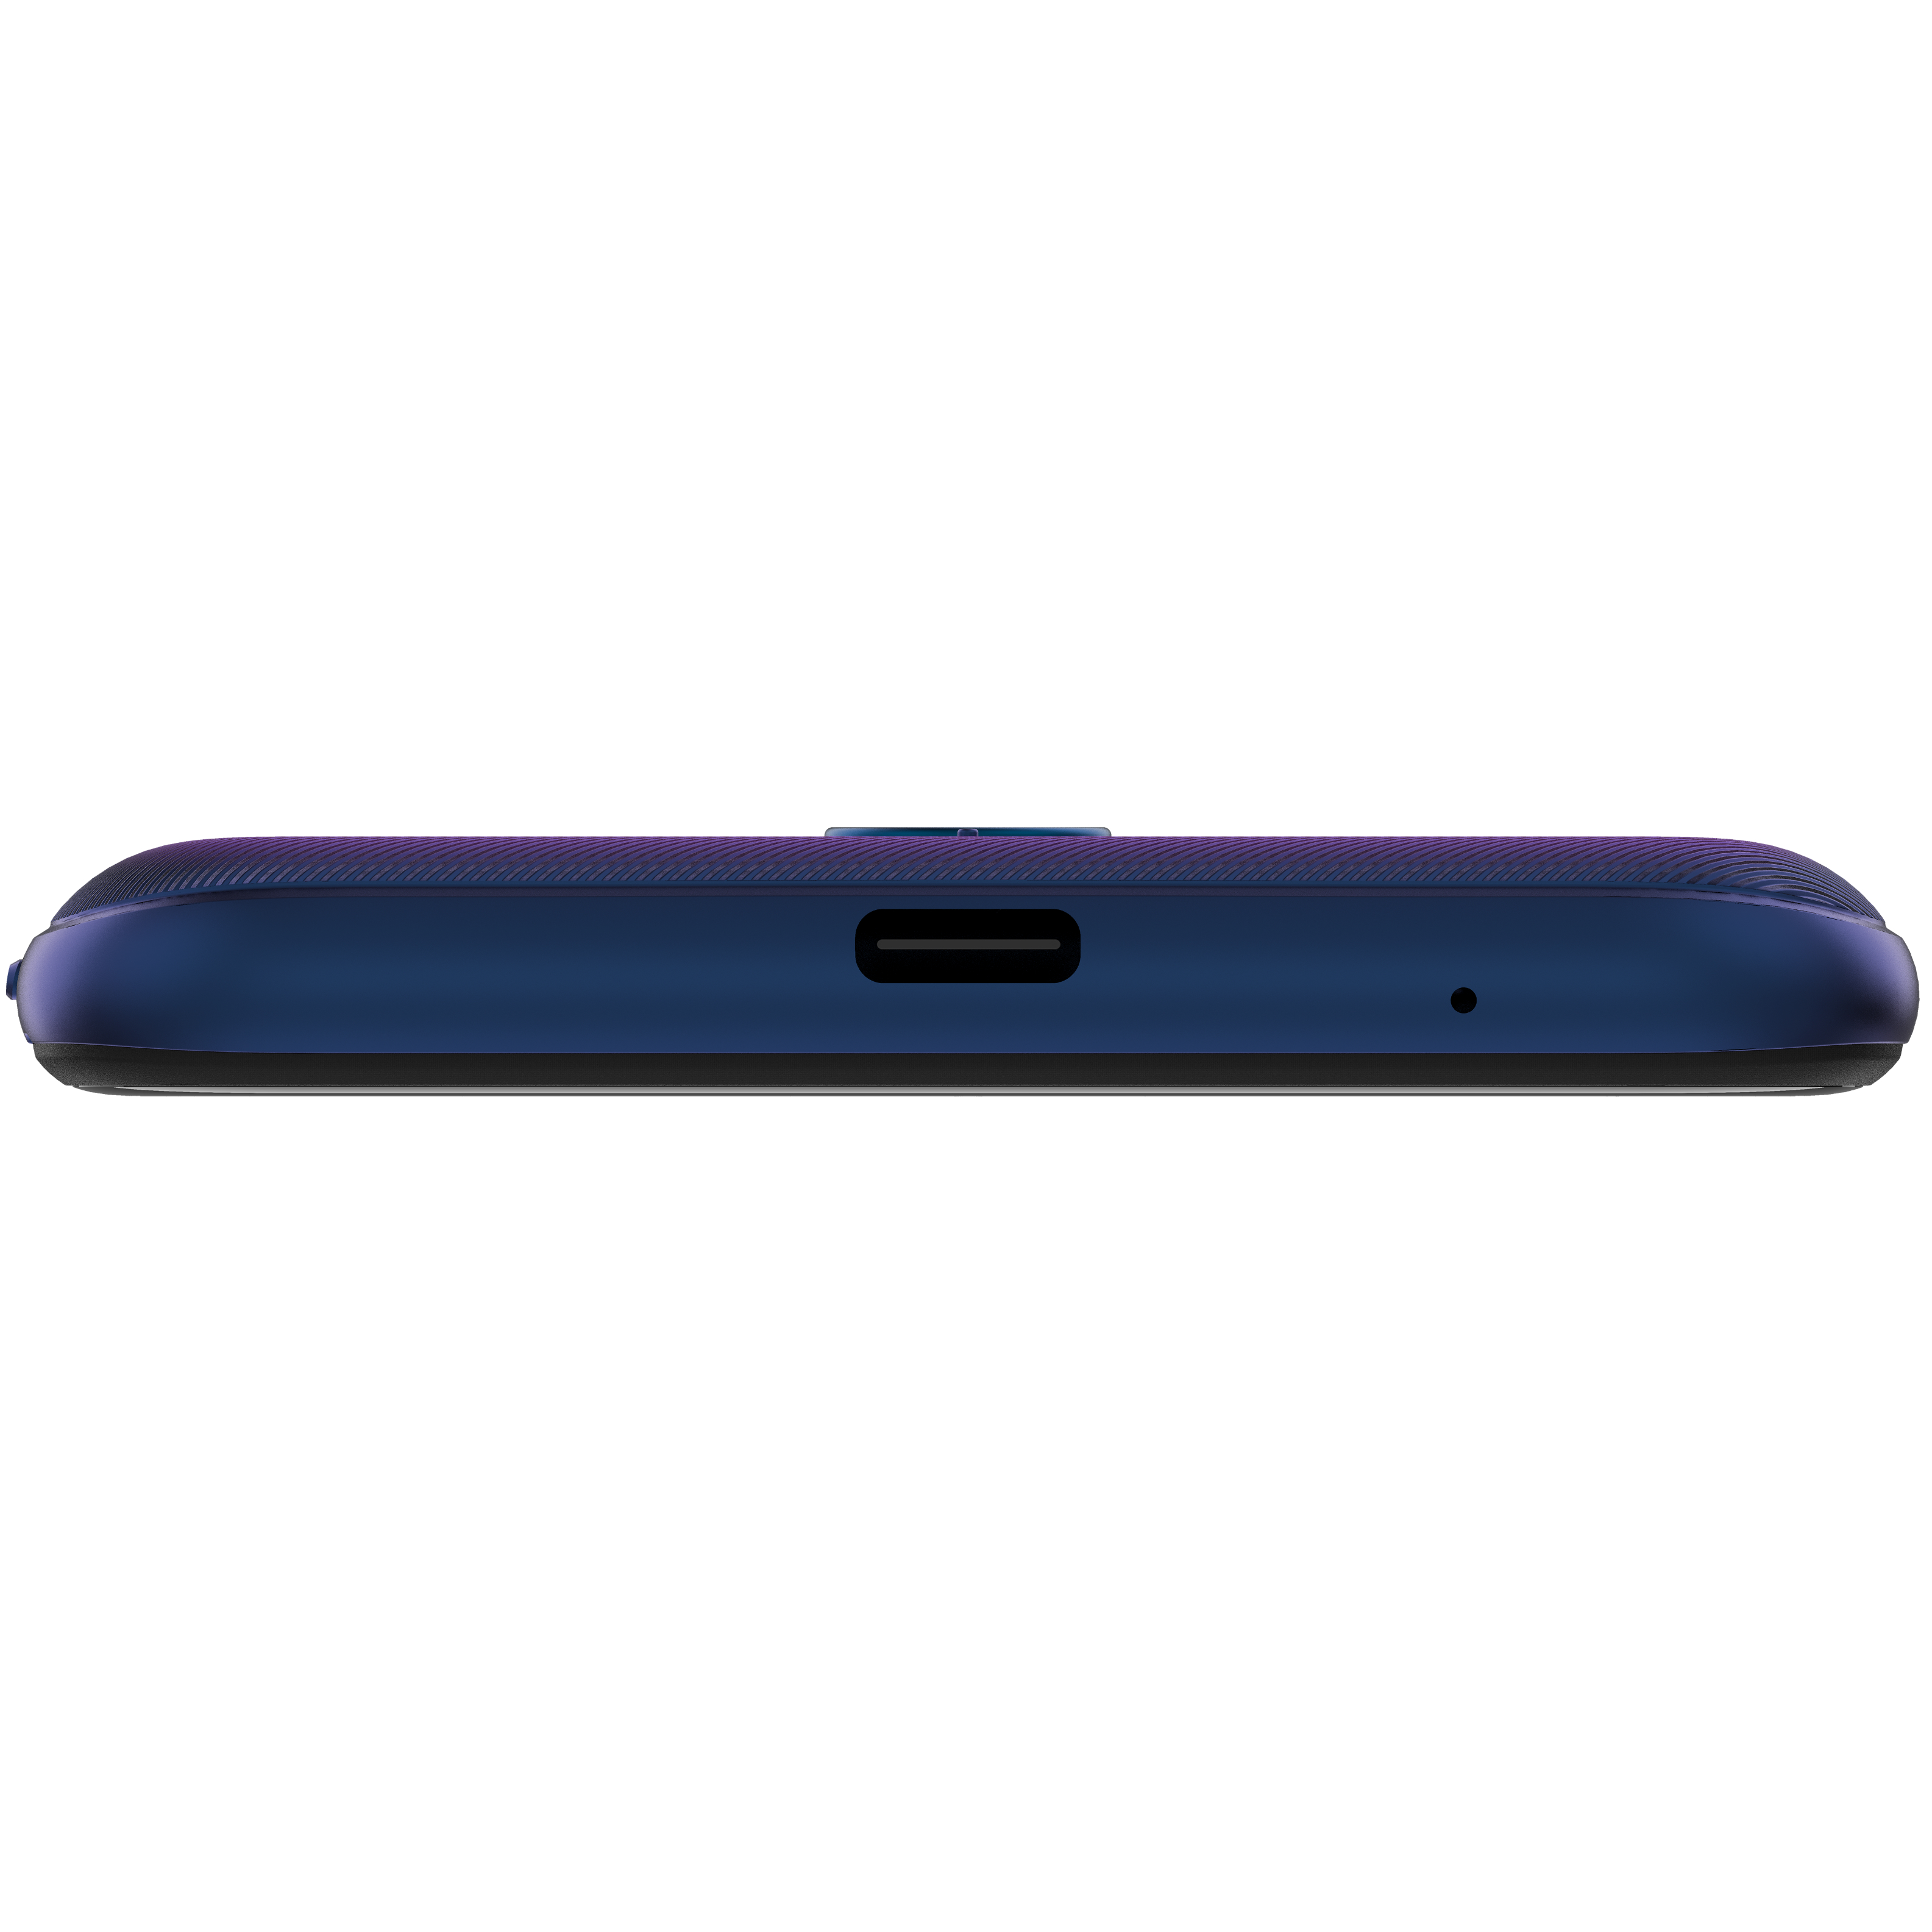 AT&T Calypso, 16GB, Chameleon Blue - Prepaid Smartphone - image 14 of 19